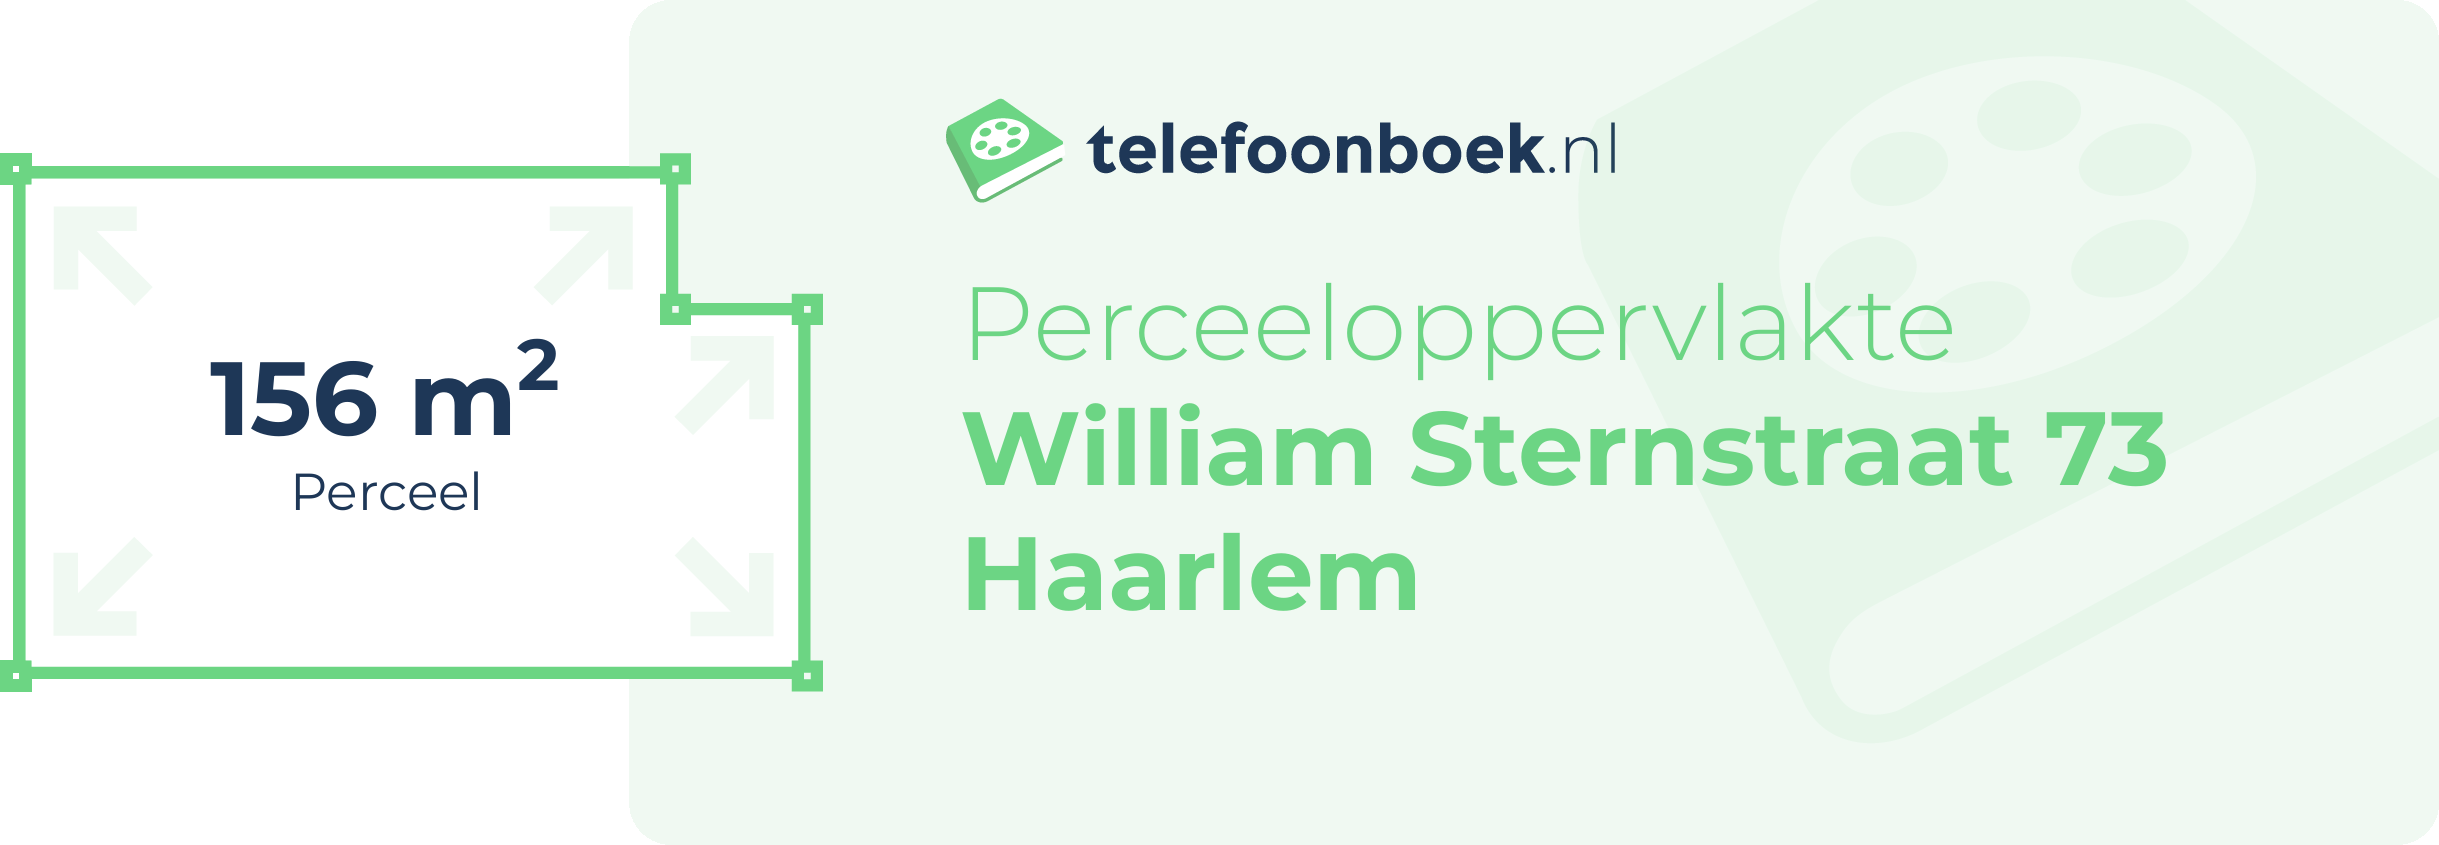 Perceeloppervlakte William Sternstraat 73 Haarlem